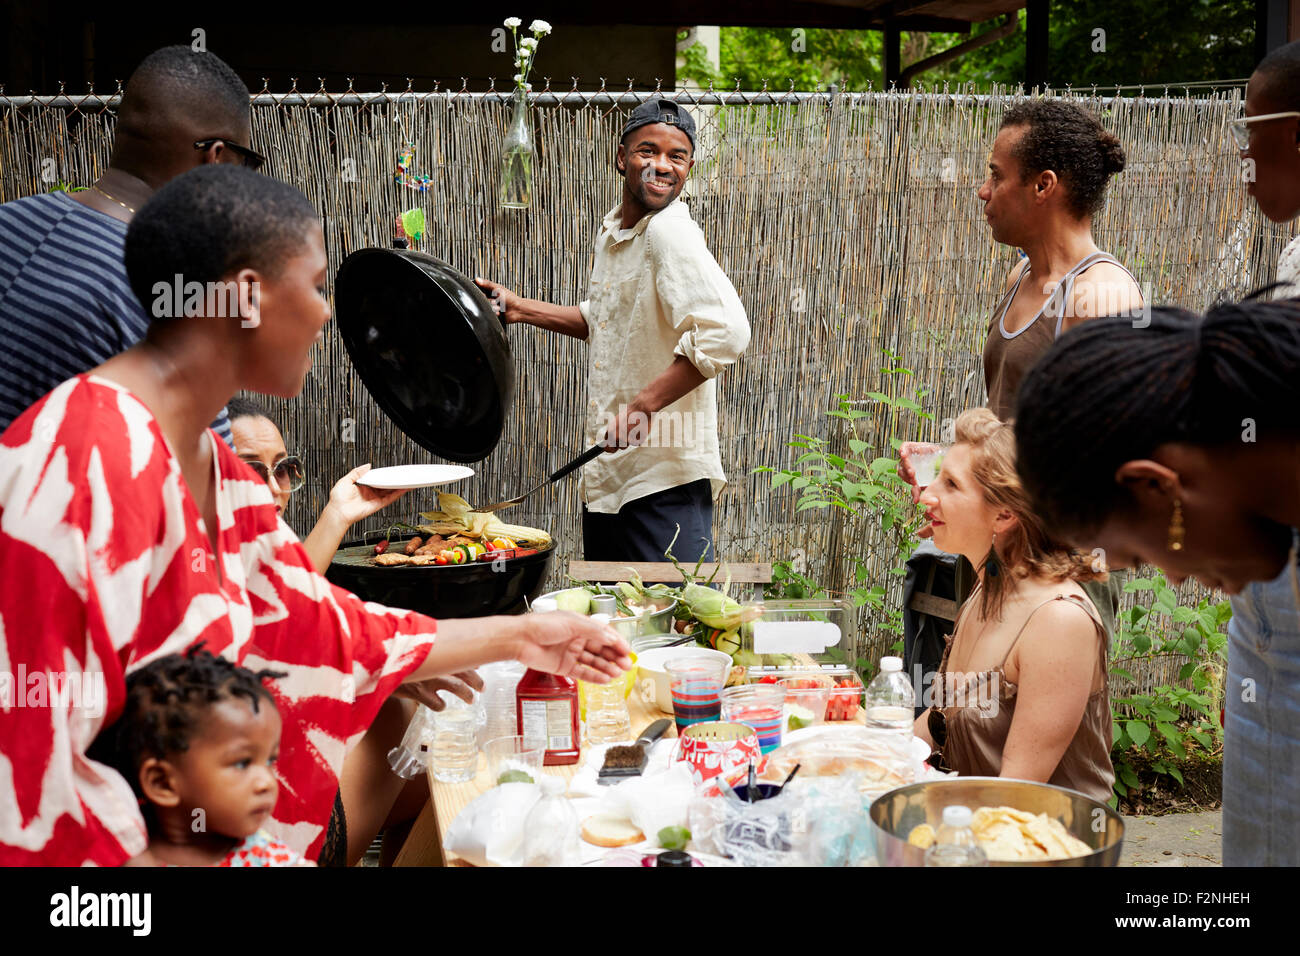 Friends enjoying backyard barbecue Stock Photo